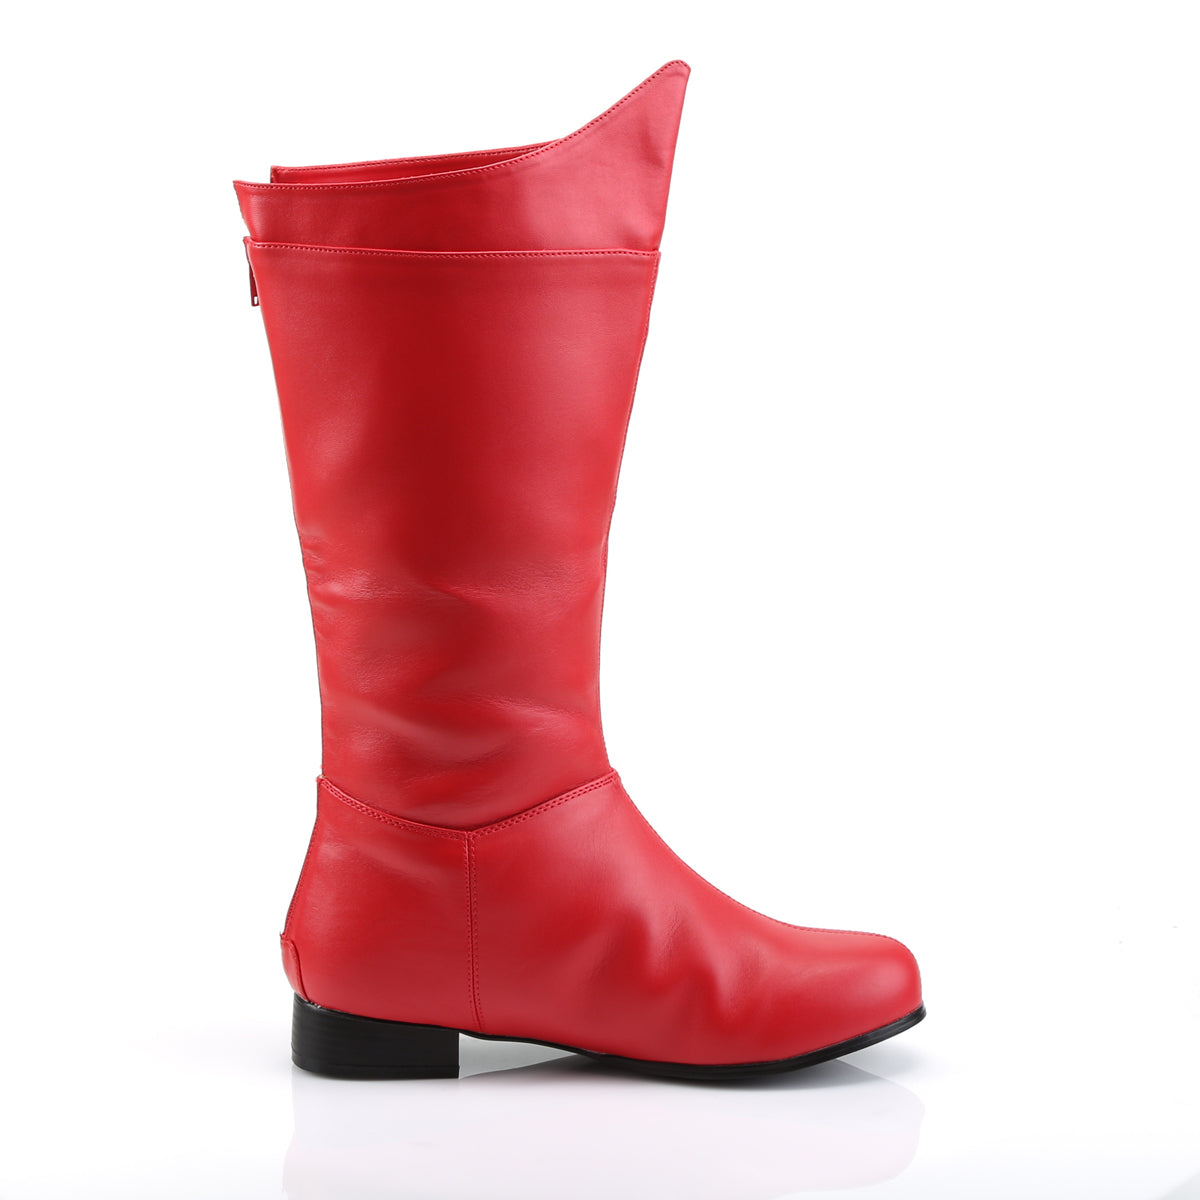 HERO-100 Fancy Dress Costume Funtasma Men's Boots Red Pu